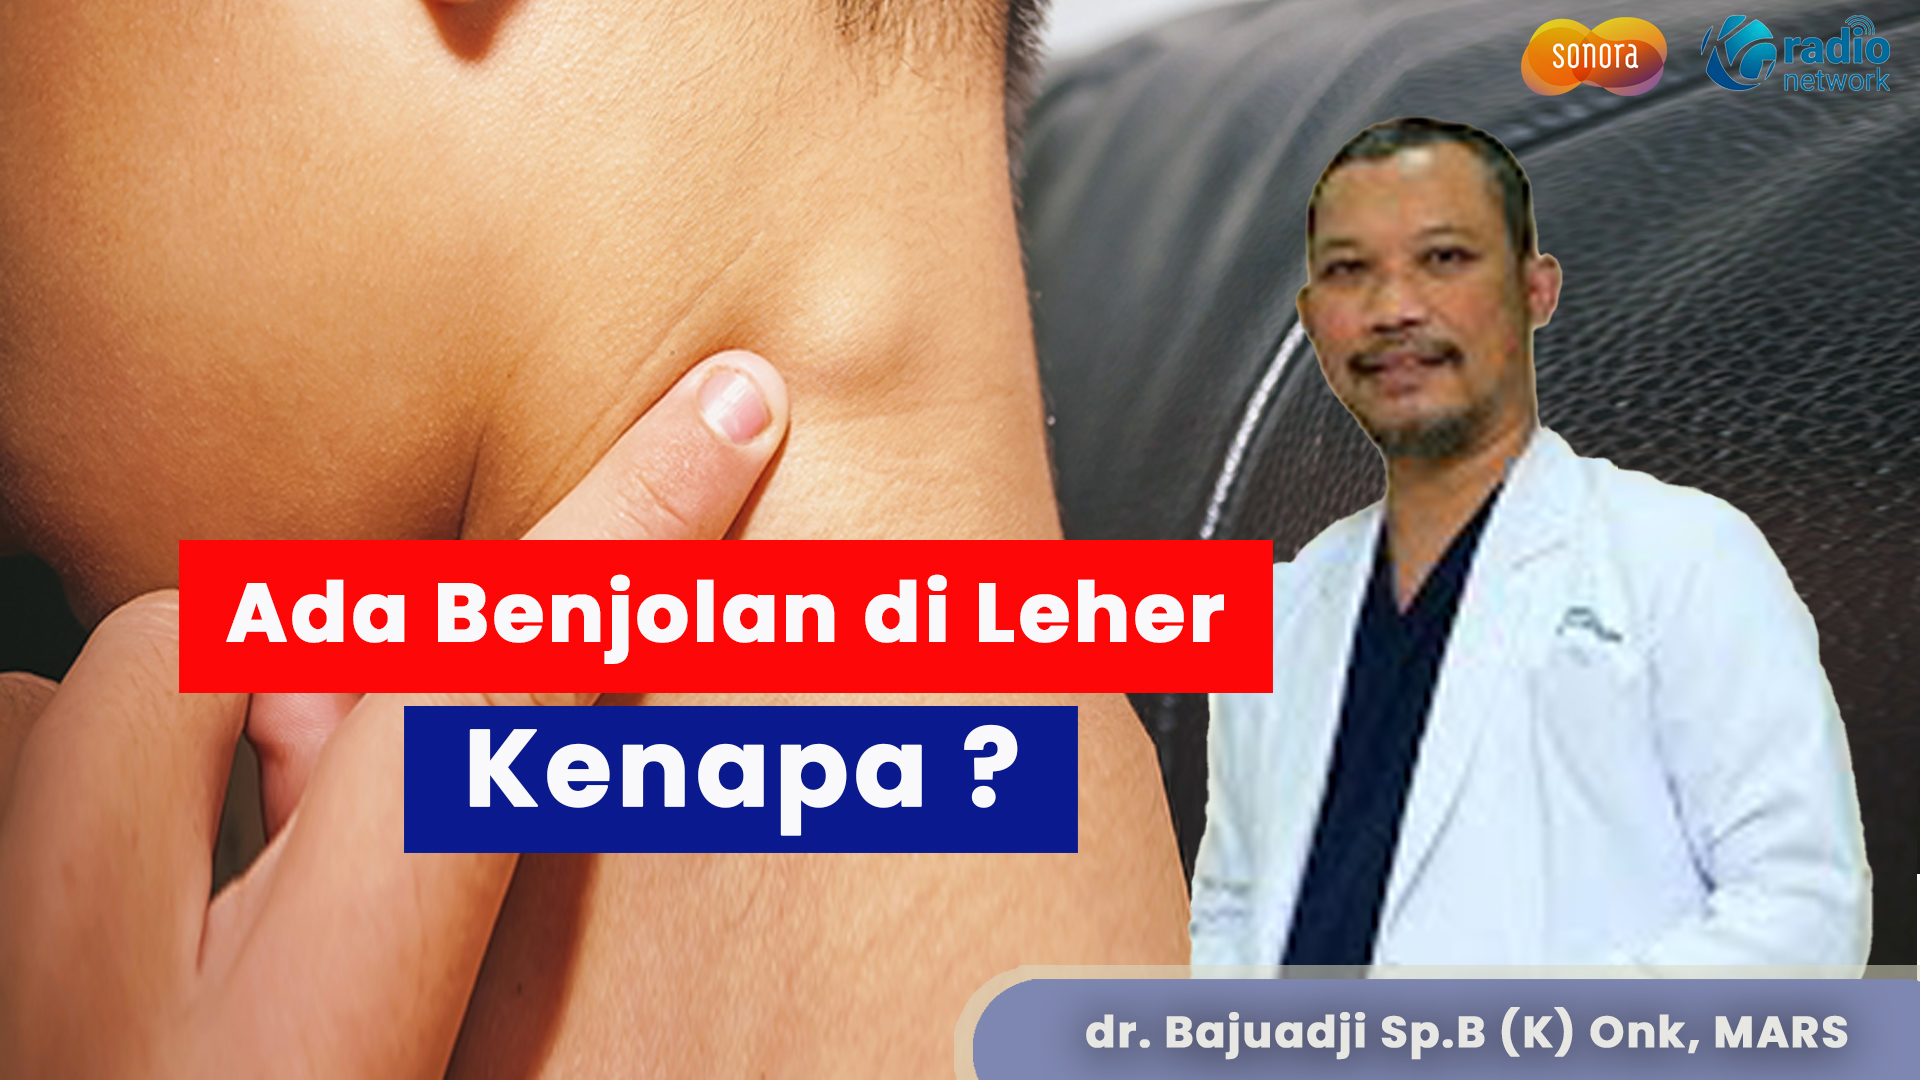 Benjolan Di Leher Pasti Kanker ? | Talkshow With Mayapada Hospital